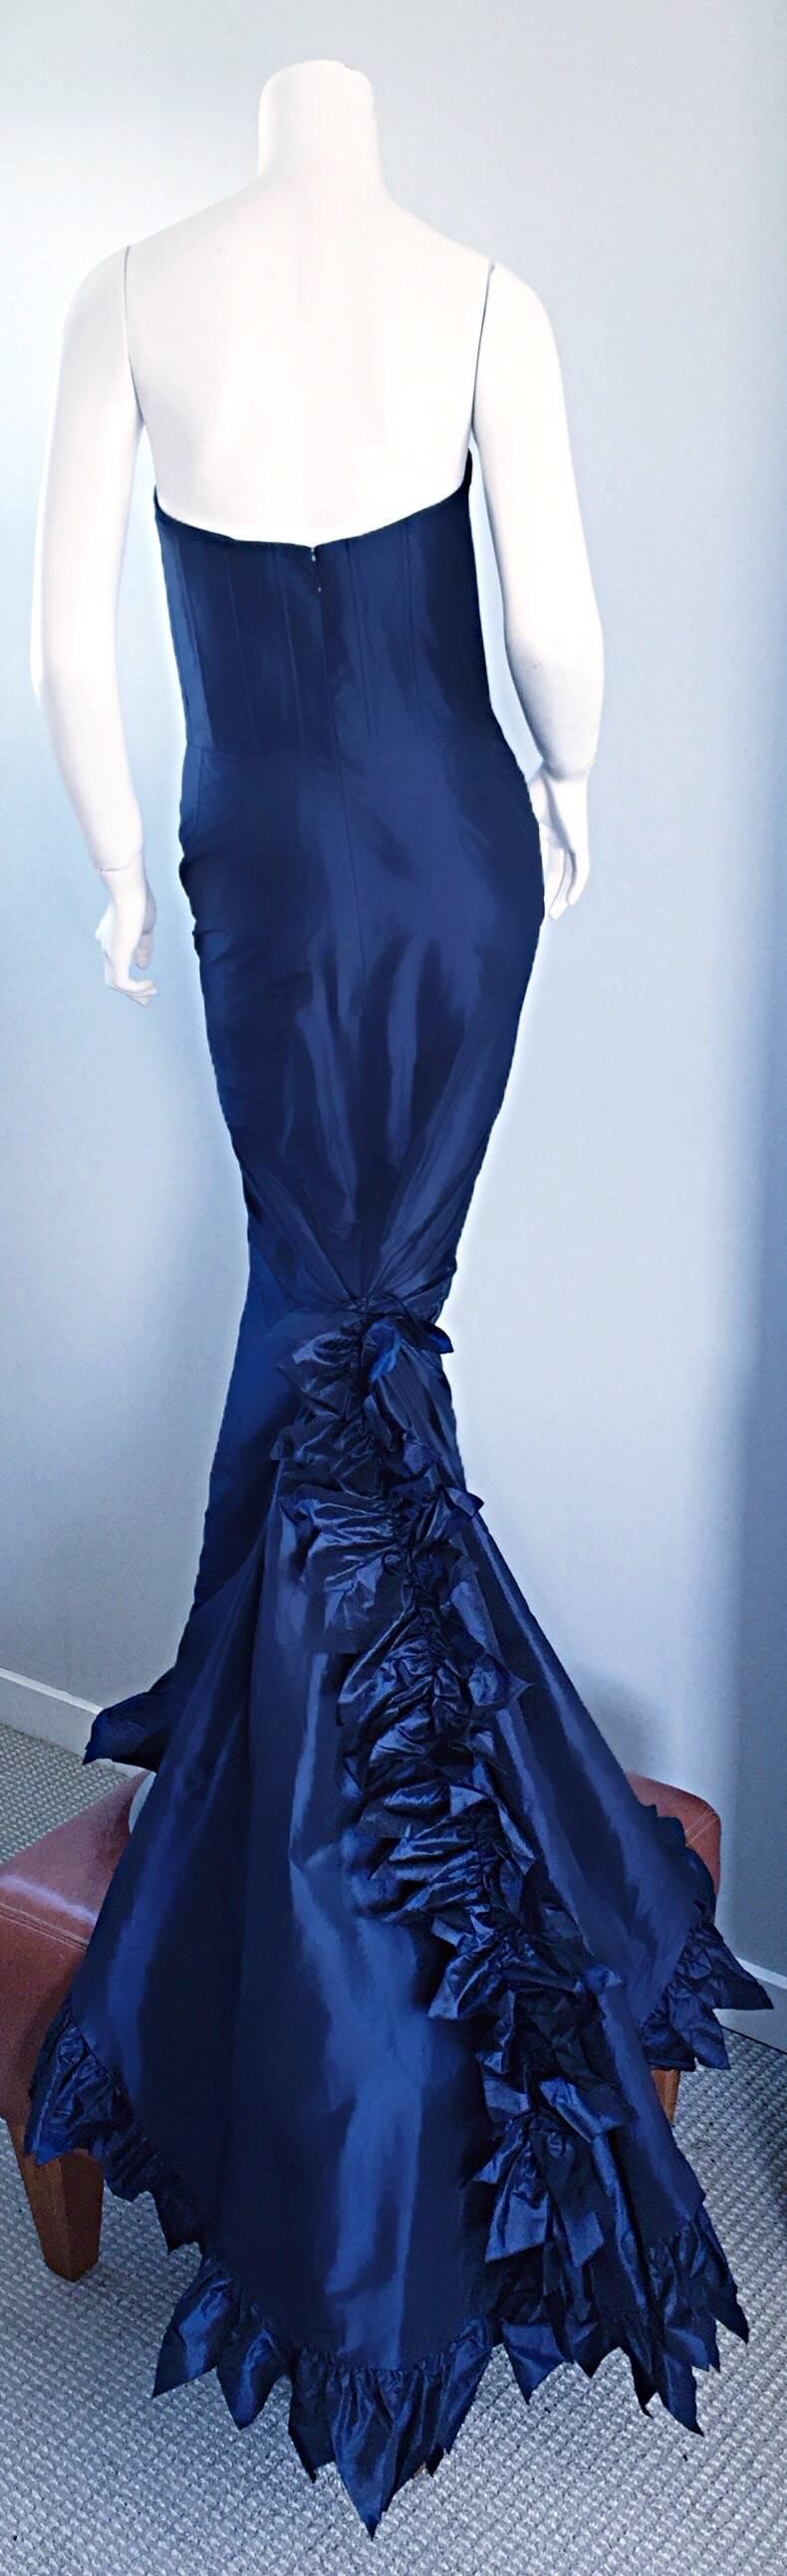 Exquisite Vintage Oscar de la Renta Navy Blue Silk Taffeta Dramatic Size 6 Gown 1